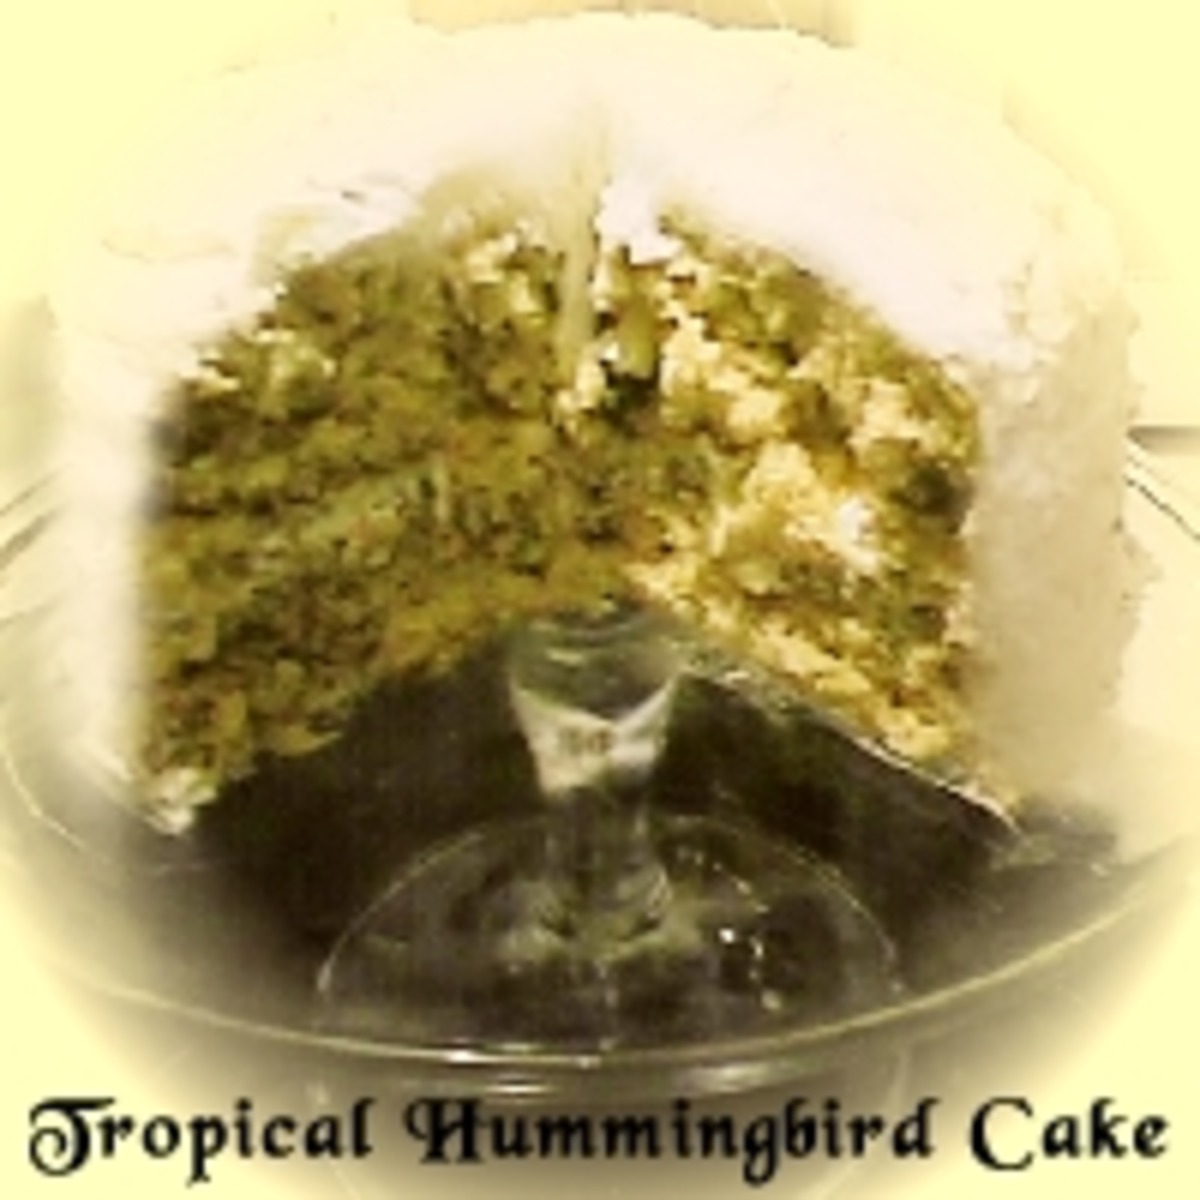 Tropical Hummingbird Cake image